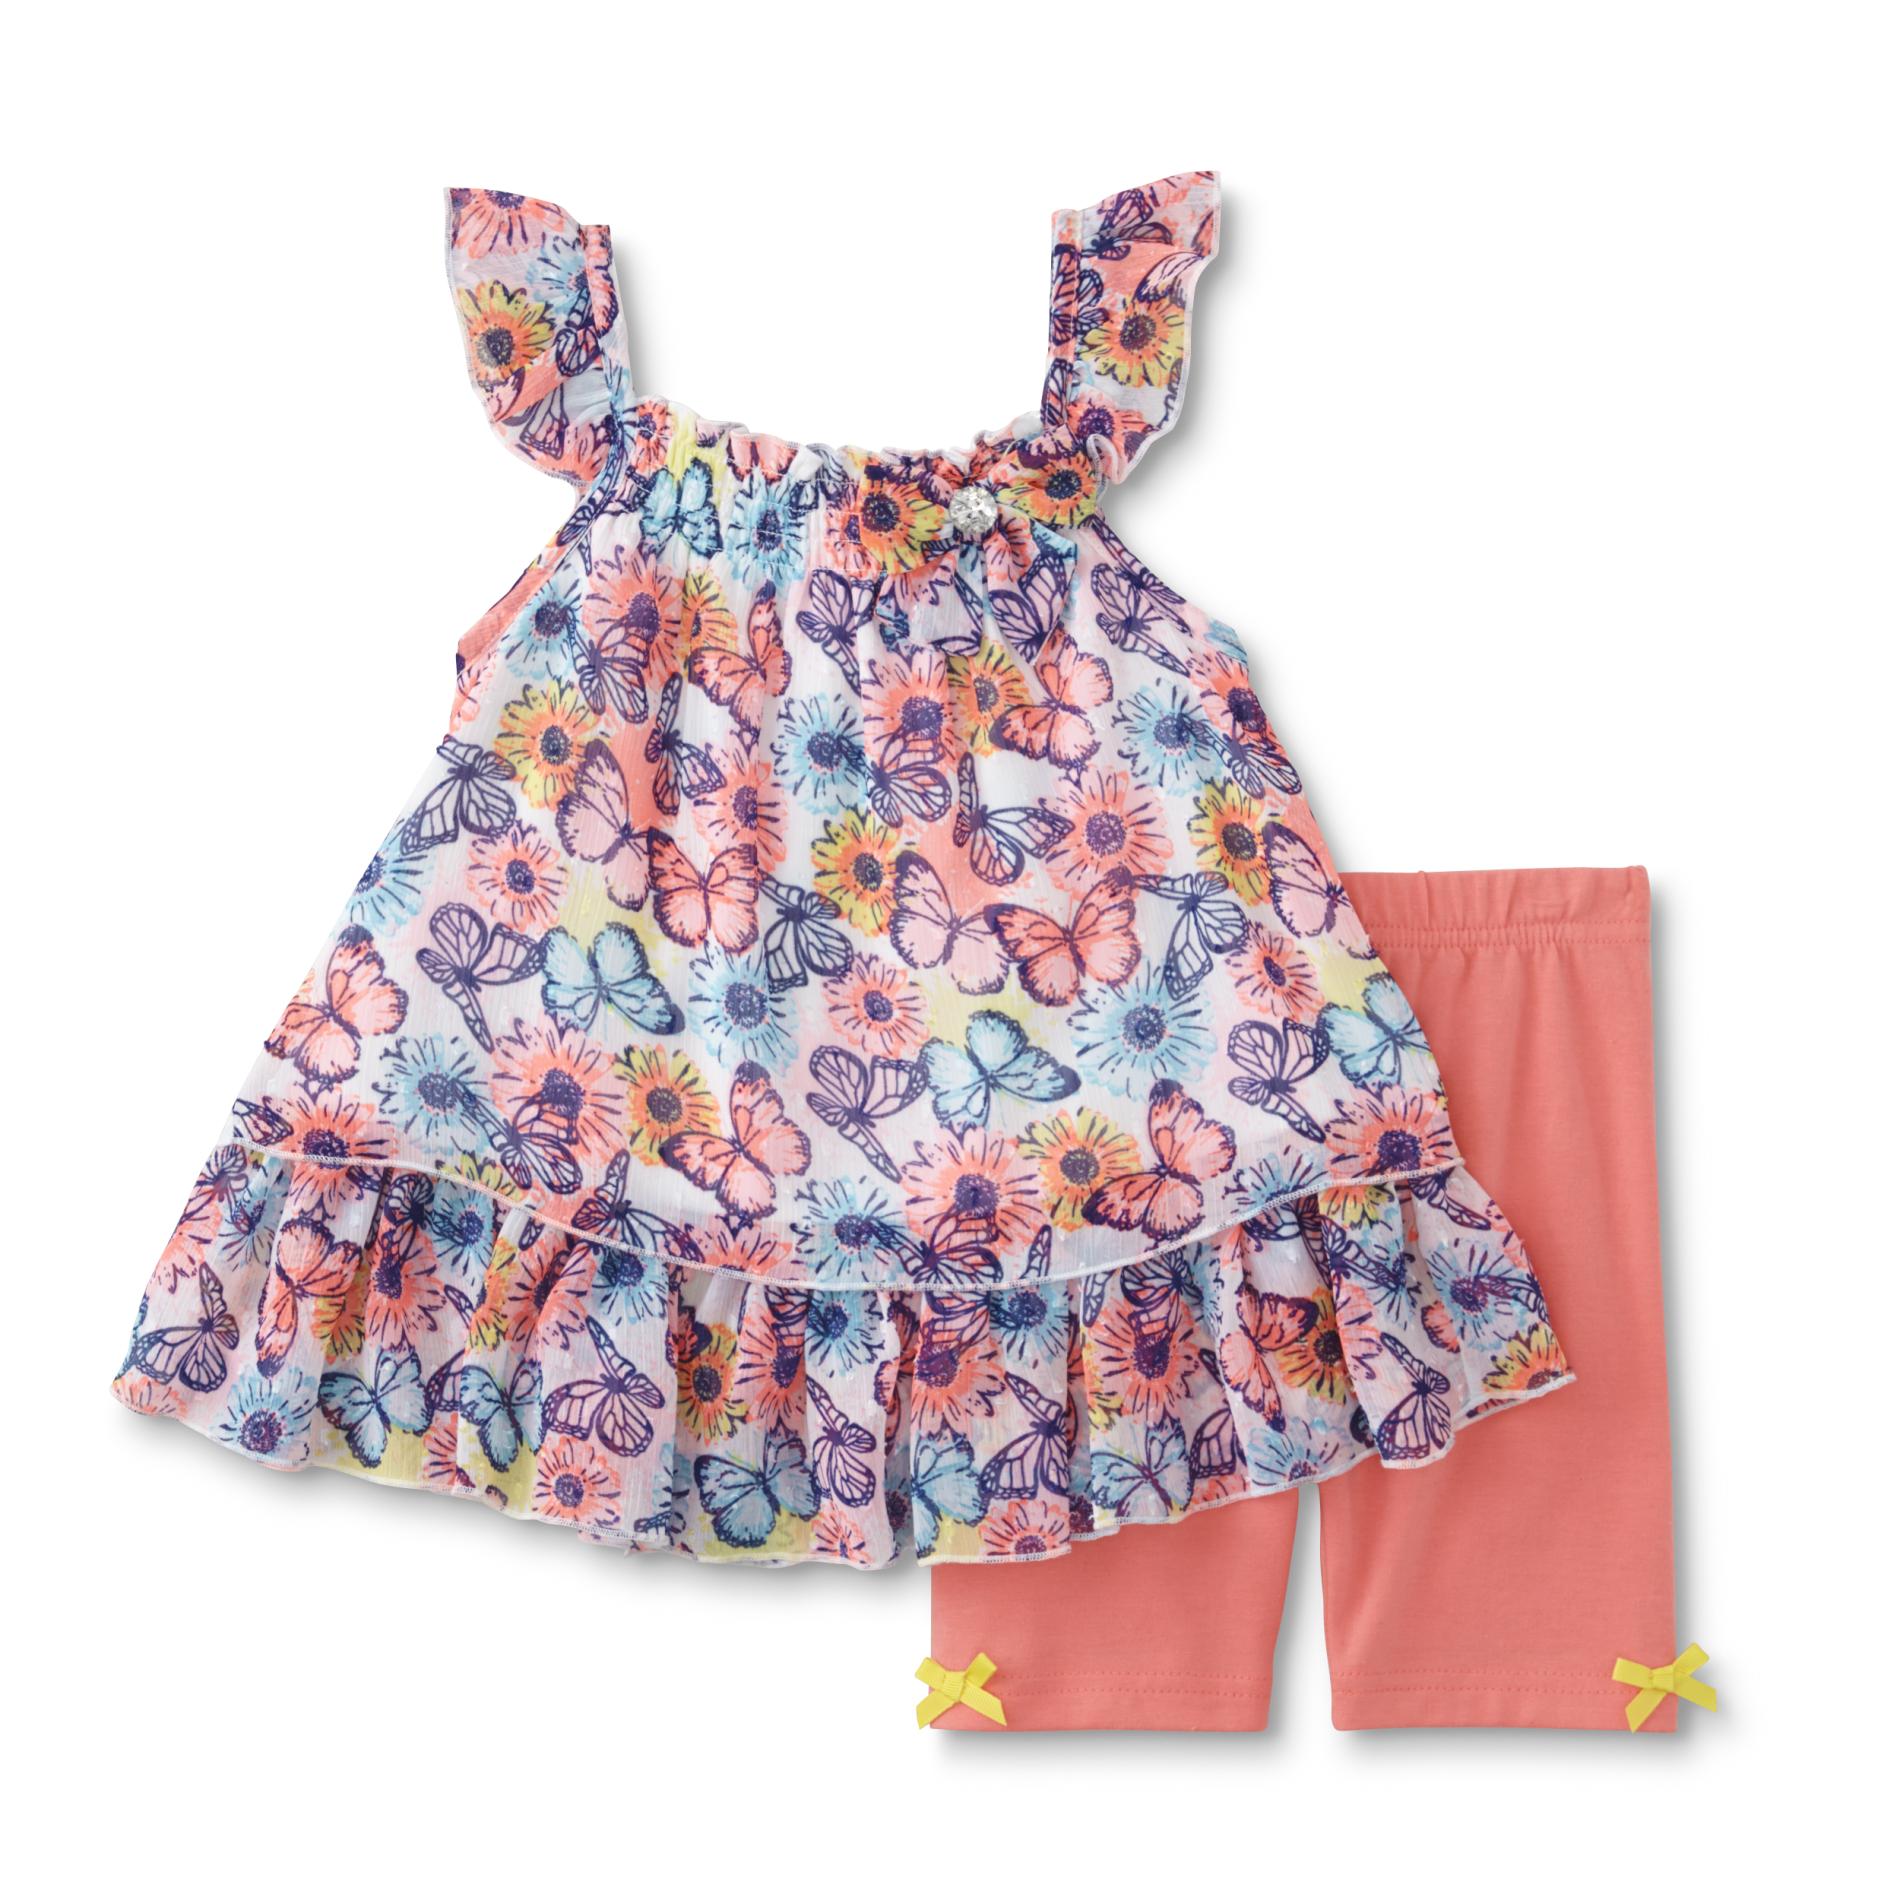 Infant & Toddler Girl's Top & Shorts